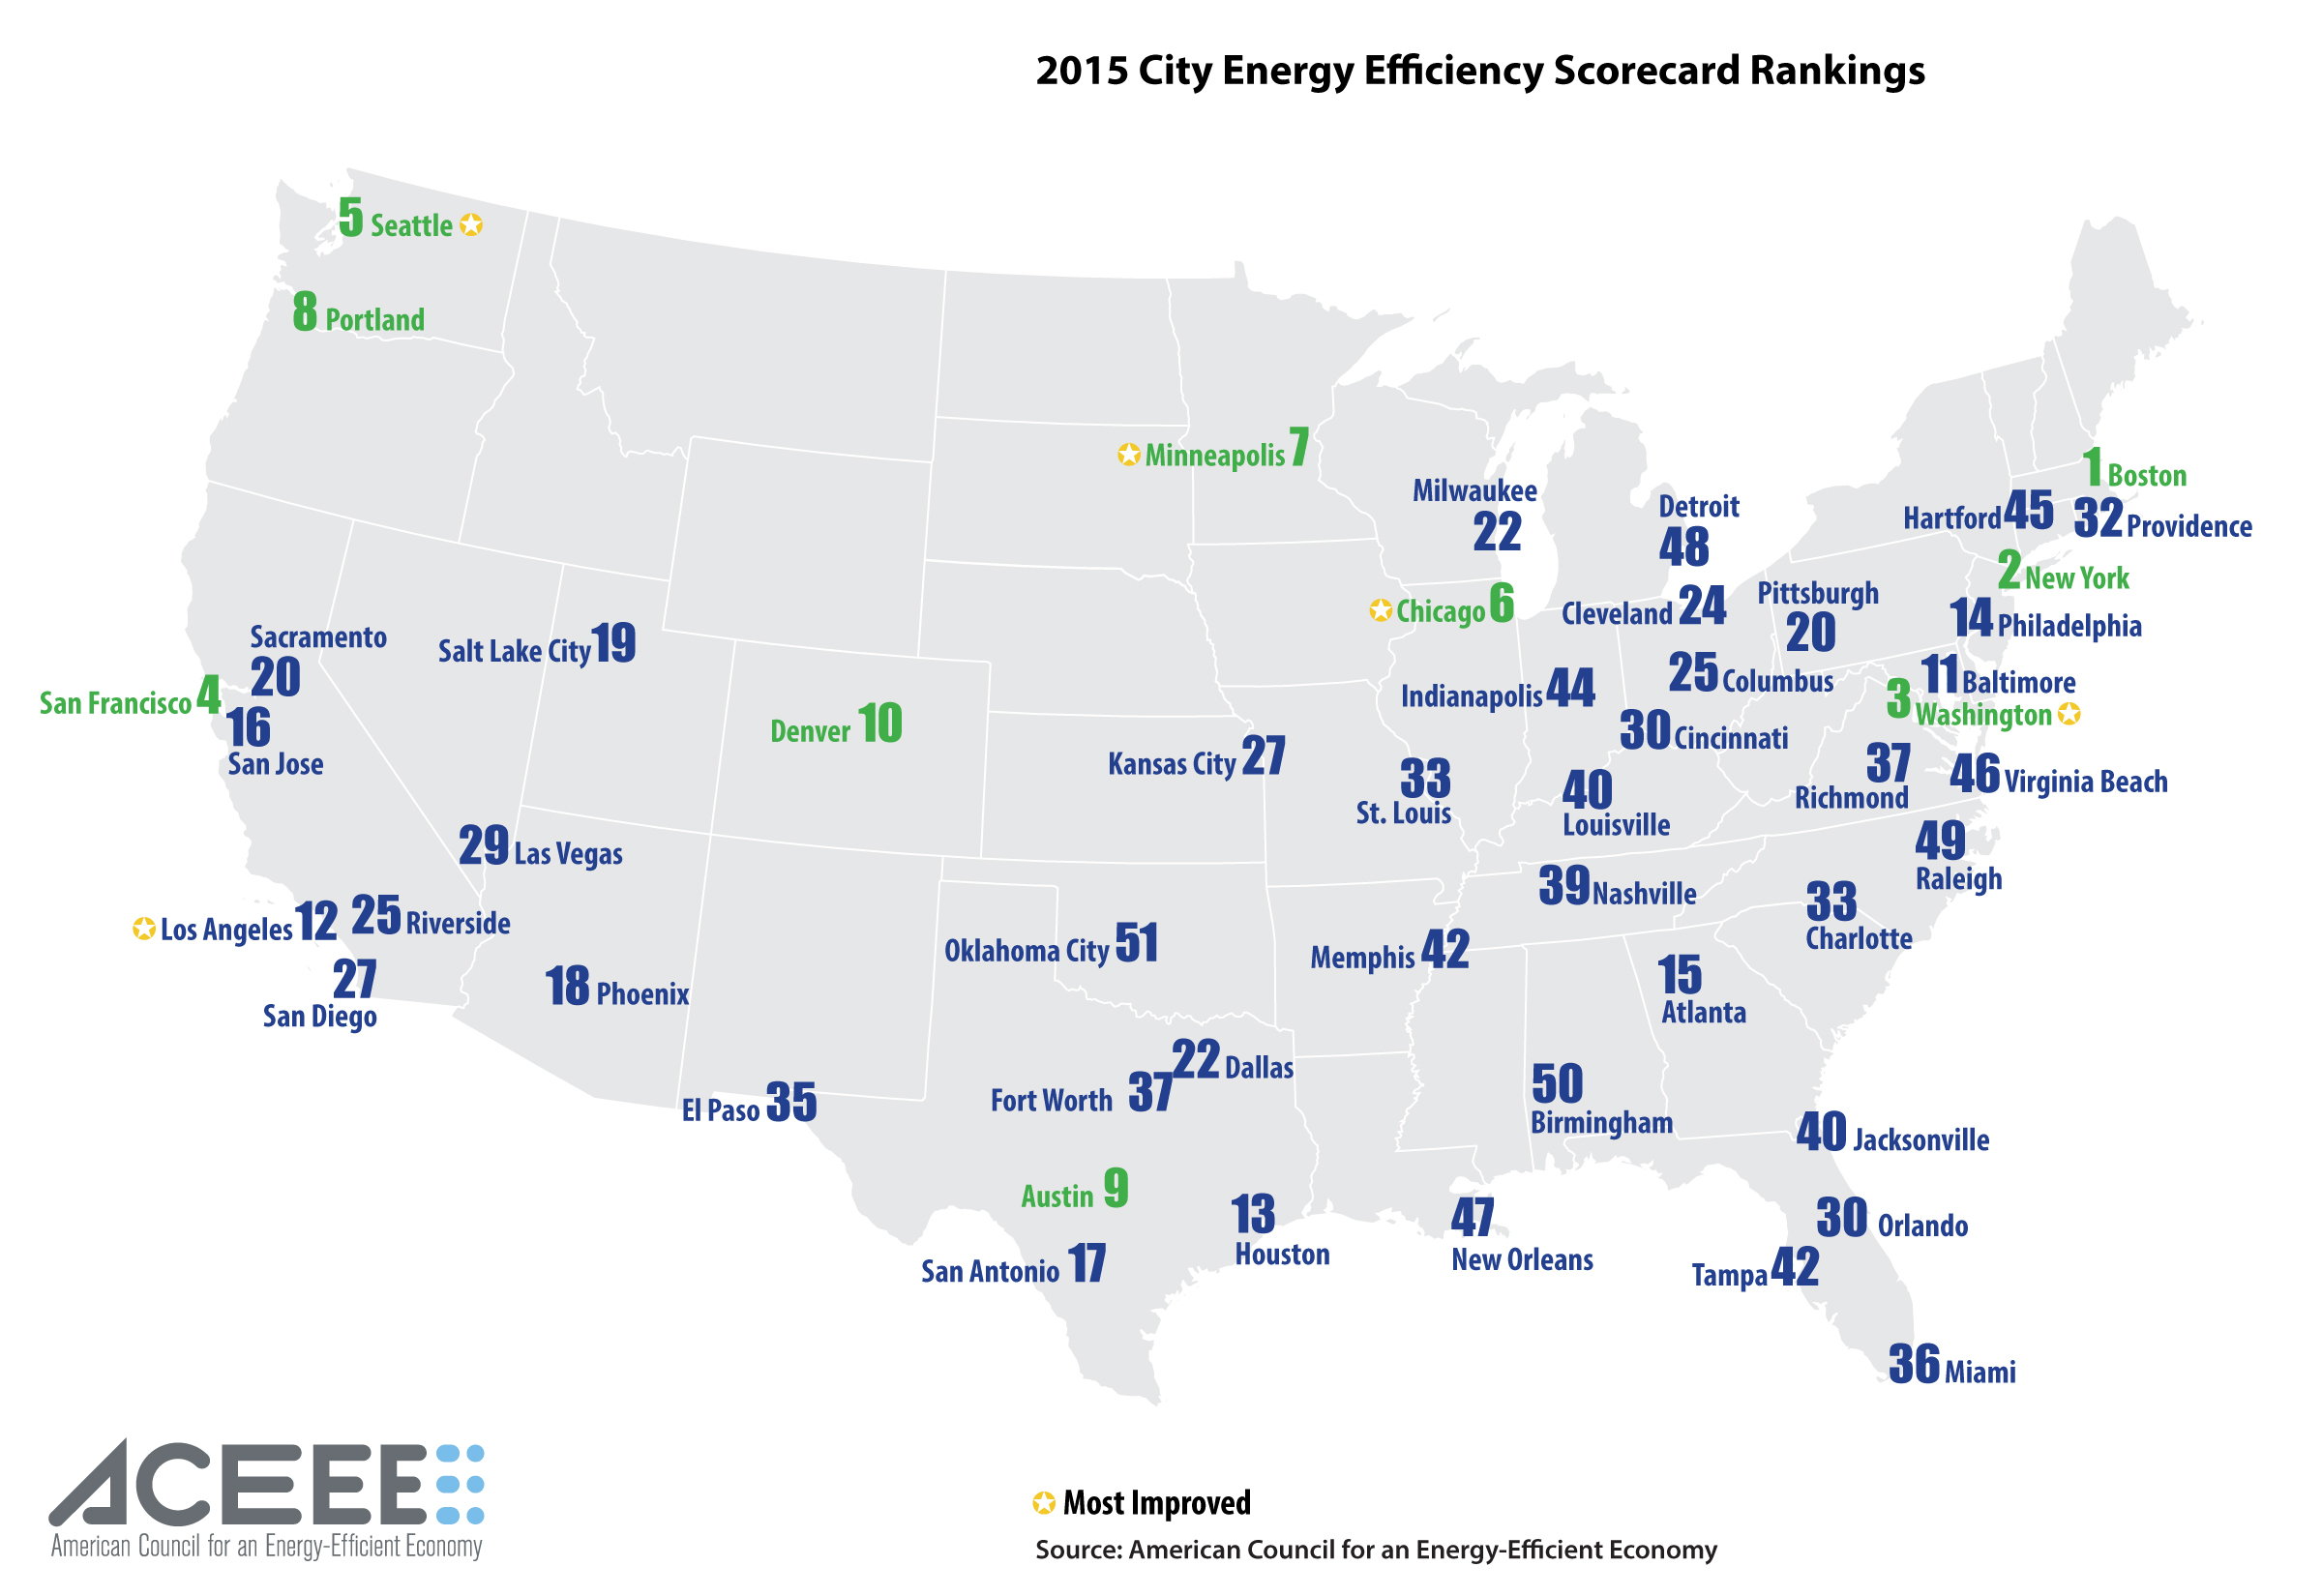 American Council for an Energy-Efficient Economy 2015 City Energy Efficiency Scorecard Rankings